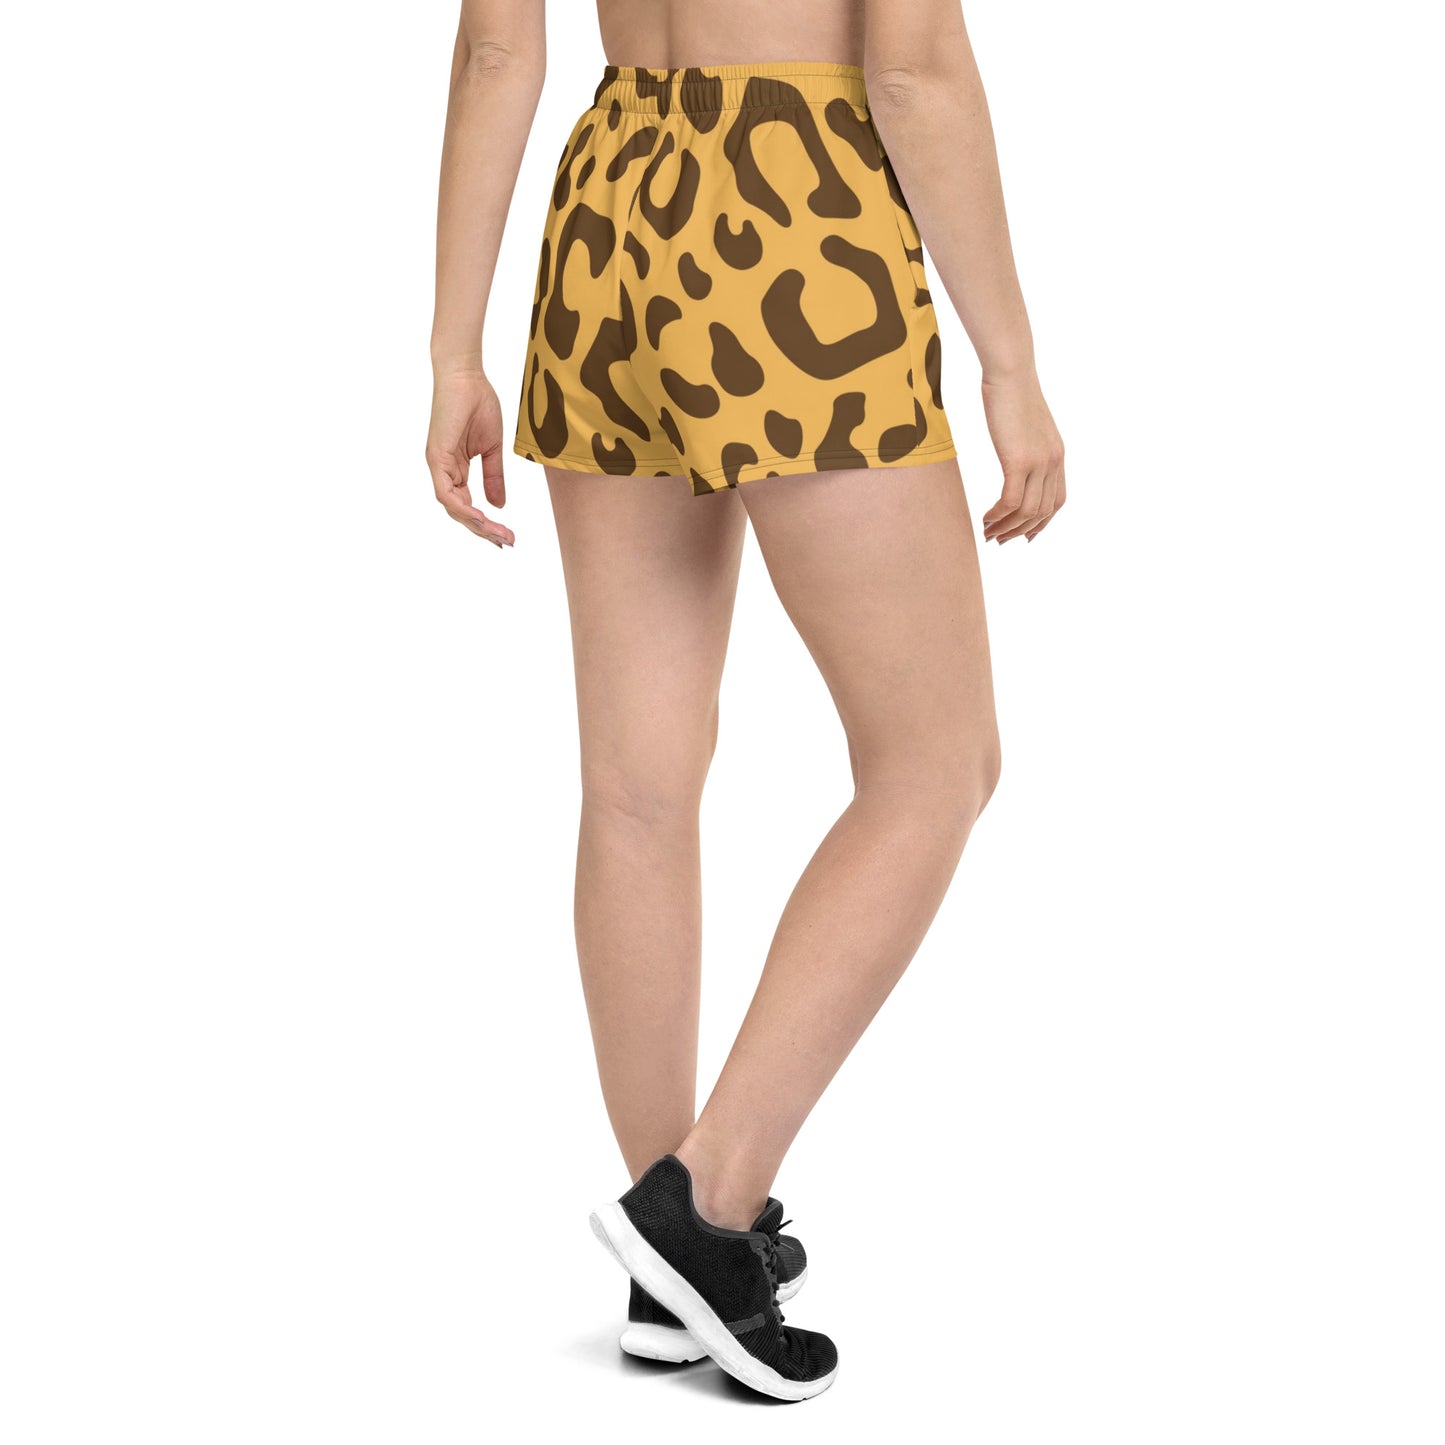 Women’s Cheetah Print Rugby Shorts (w/ Pockets)